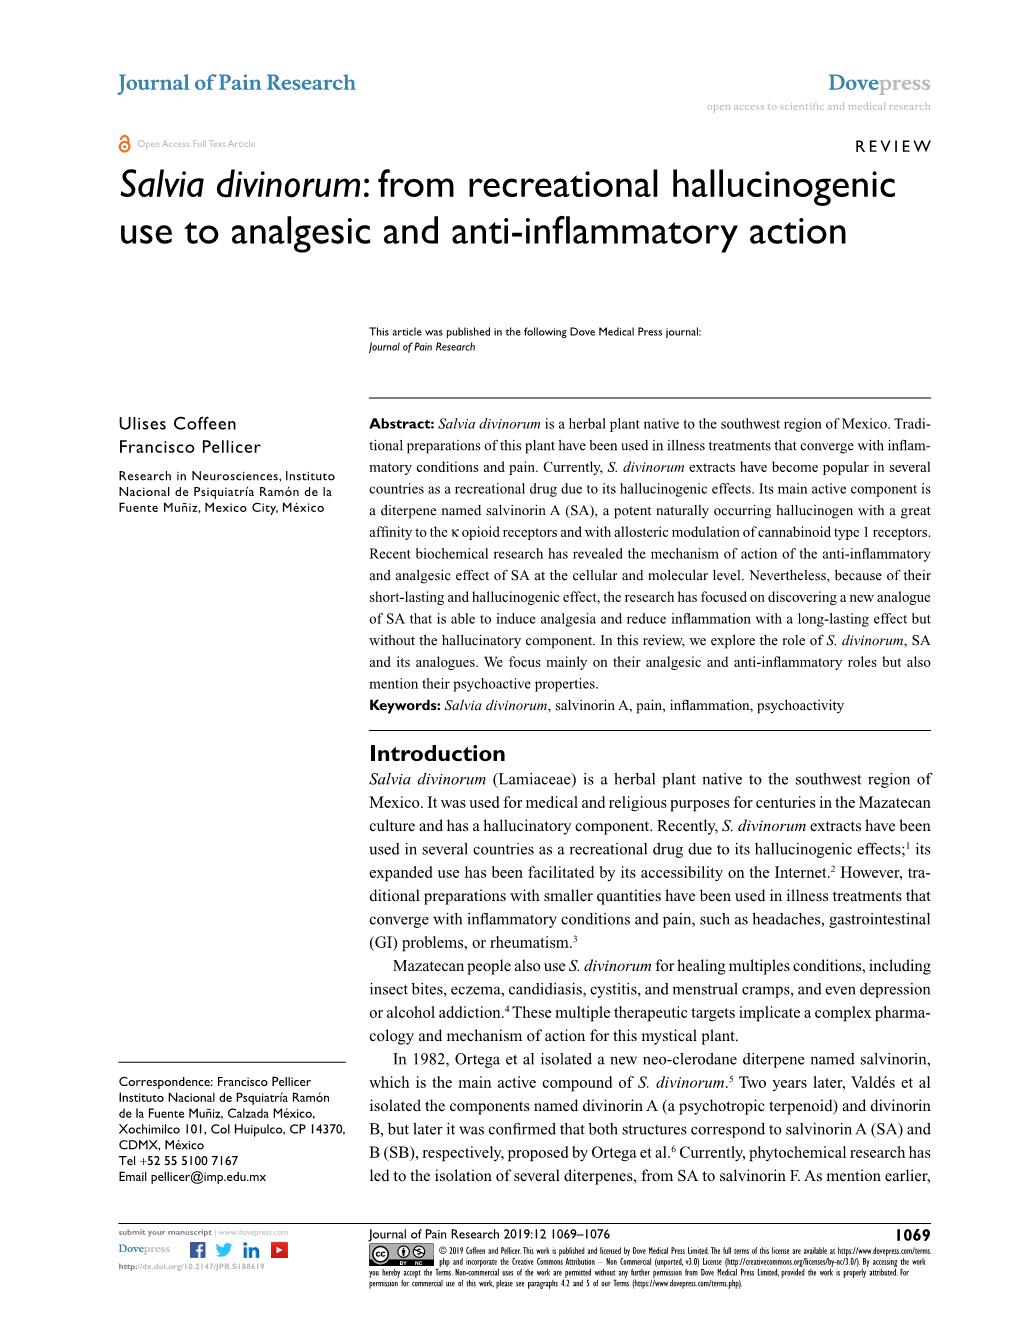 Salvia Divinorum: from Recreational Hallucinogenic Use to Analgesic and Anti-Inflammatory Action